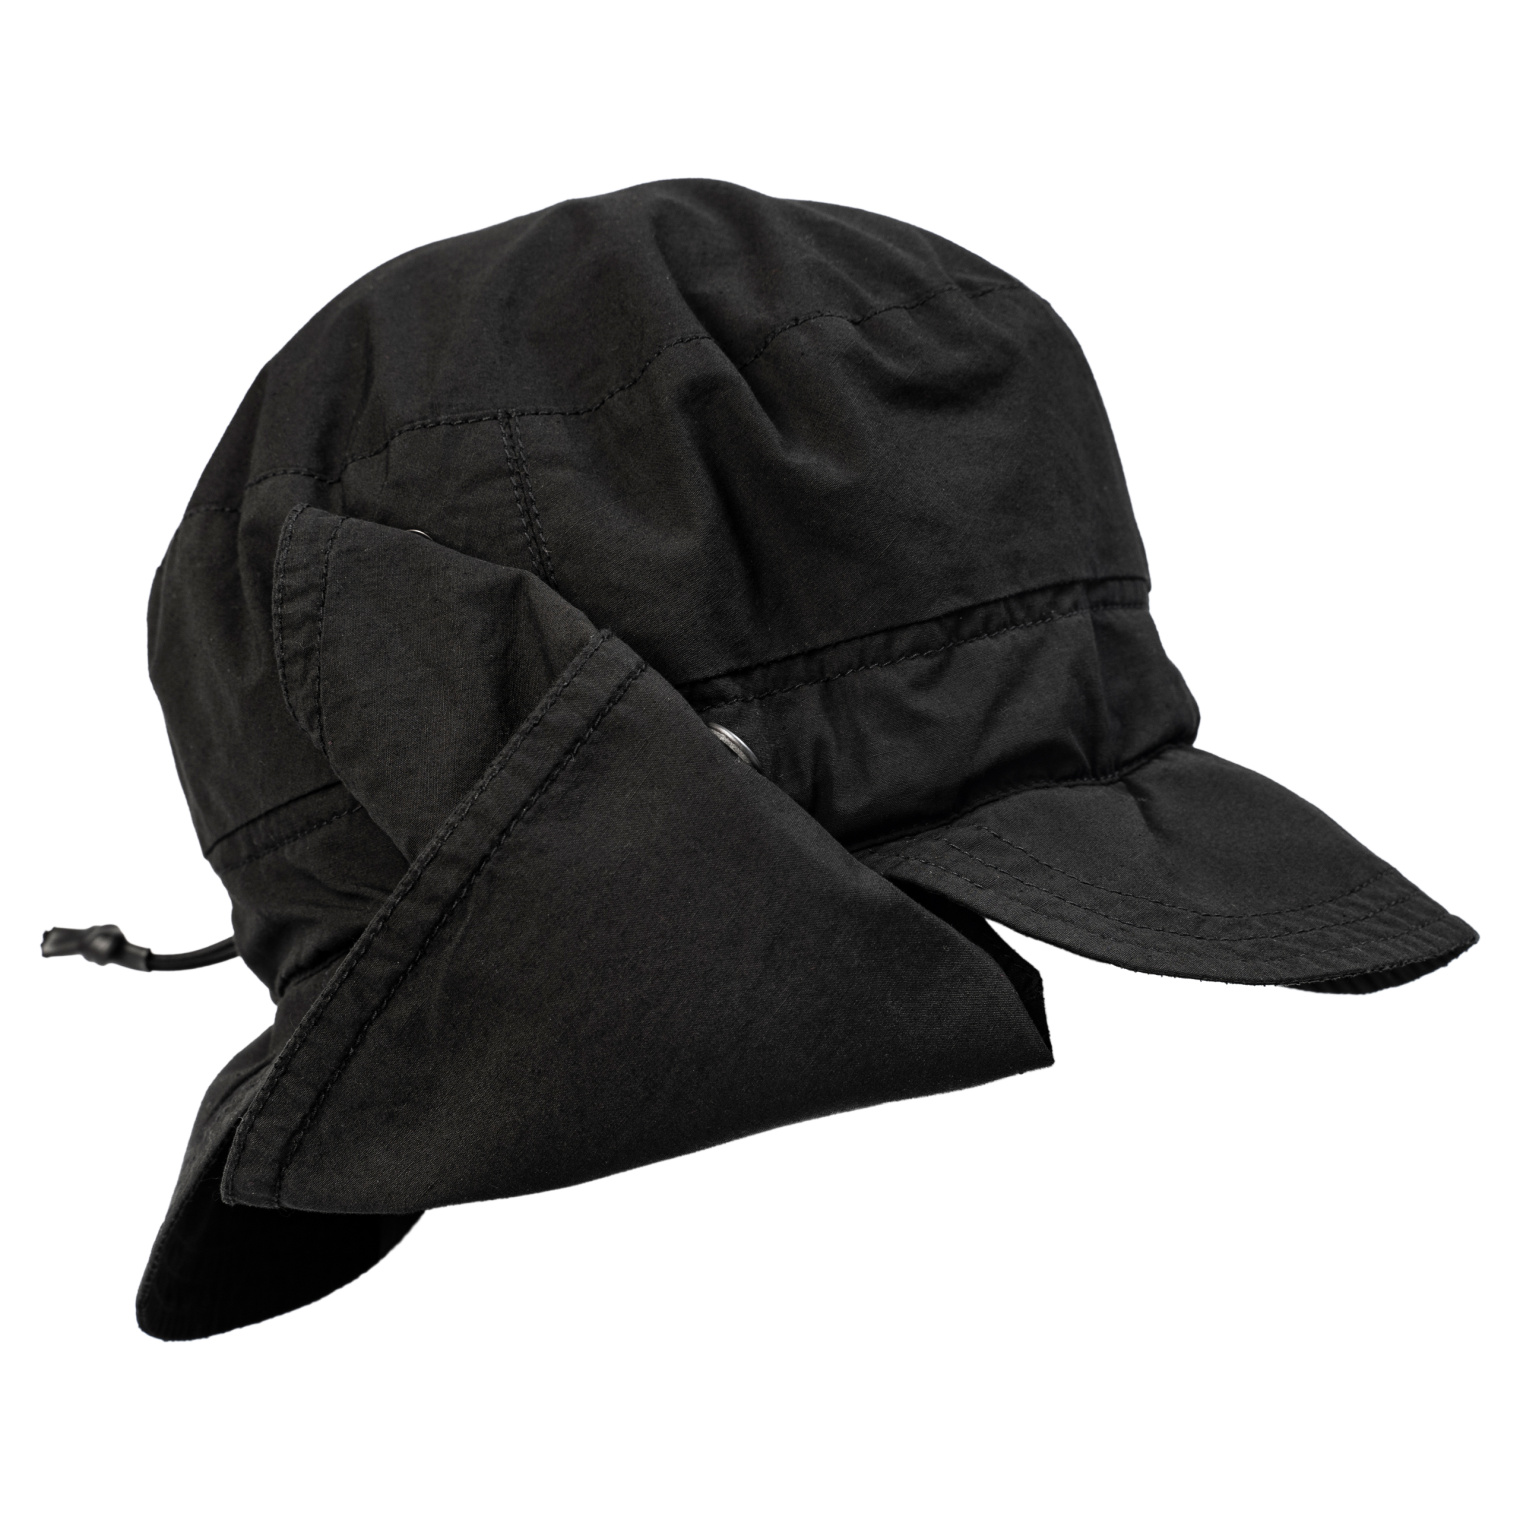 The Viridi-Anne Black Cotton mask cap